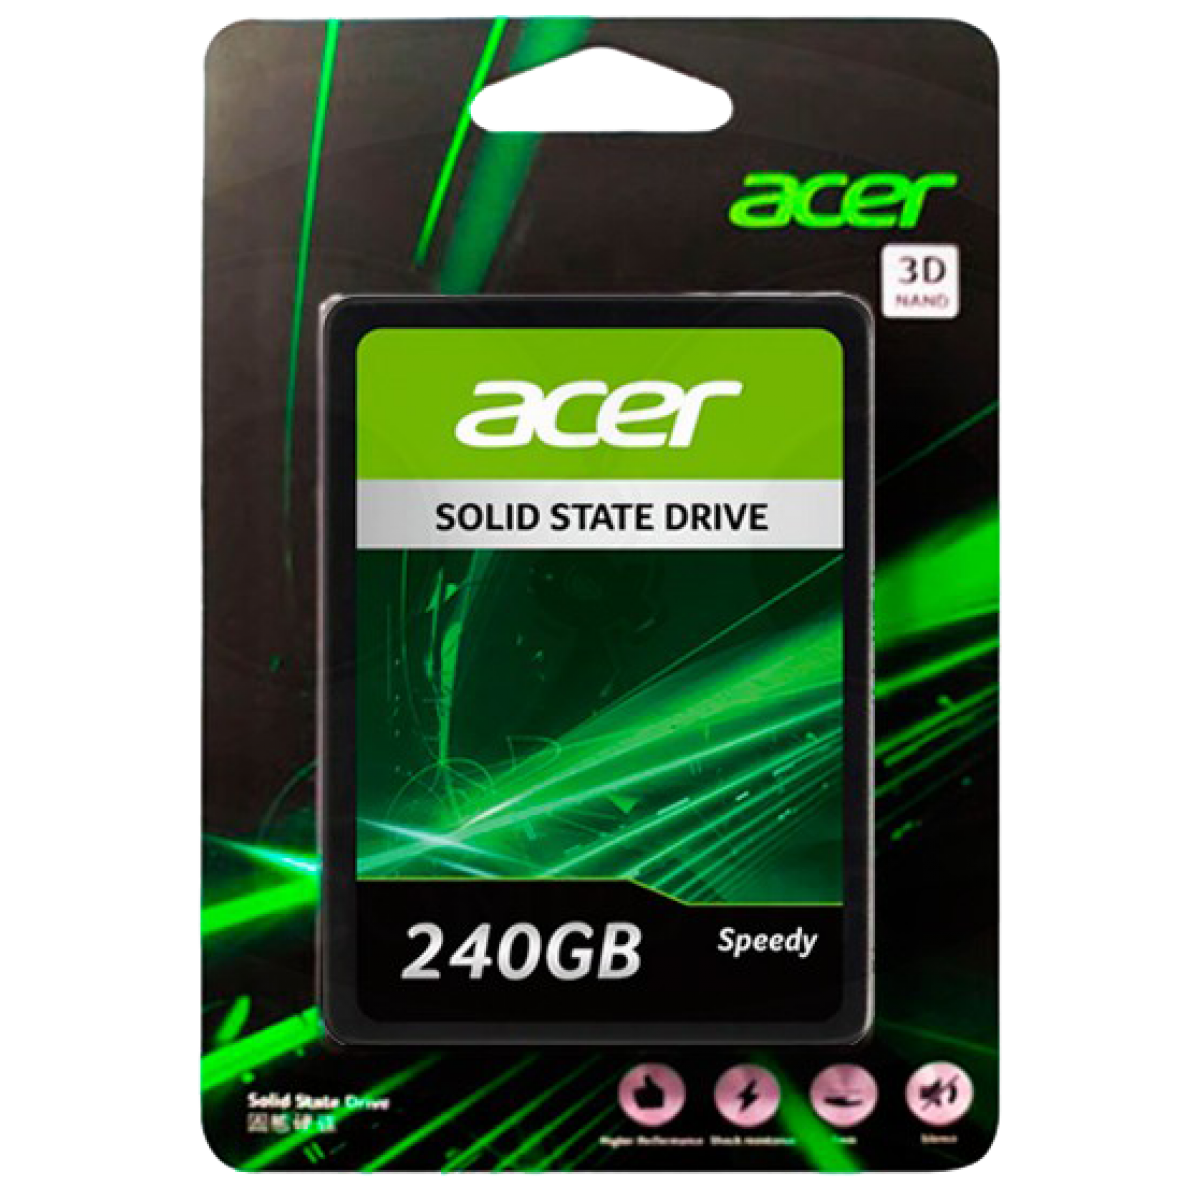 SSD Acer, Speedy, 240GB, SATA III, 550MB/s leitura, 490MB/s gravação, GP.SRG11.00F